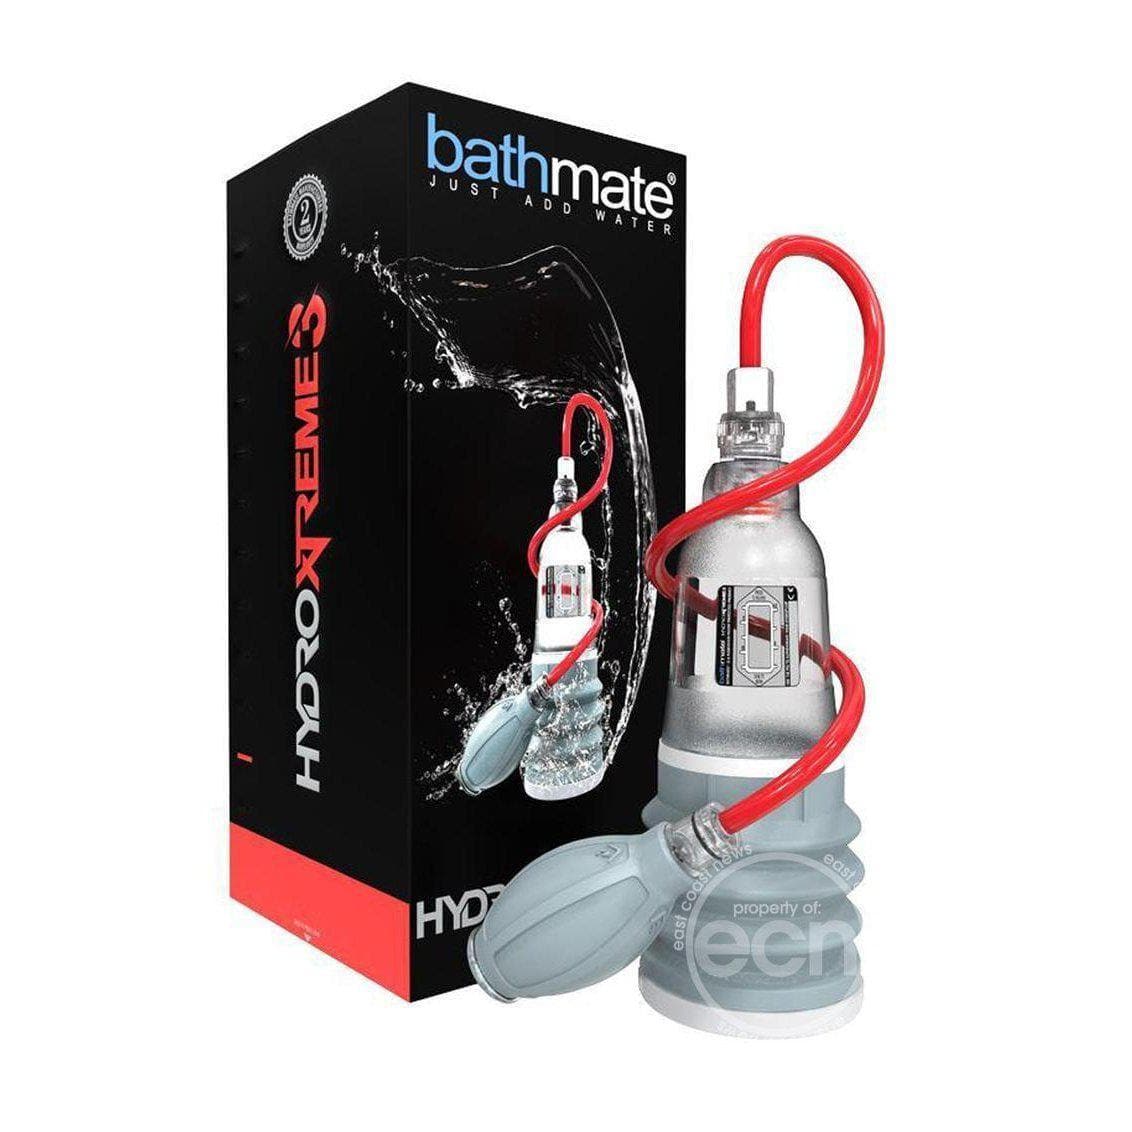 Bathmate Hydroxtreme3 Penis Pump Water Pump Kit - Romantic Blessings